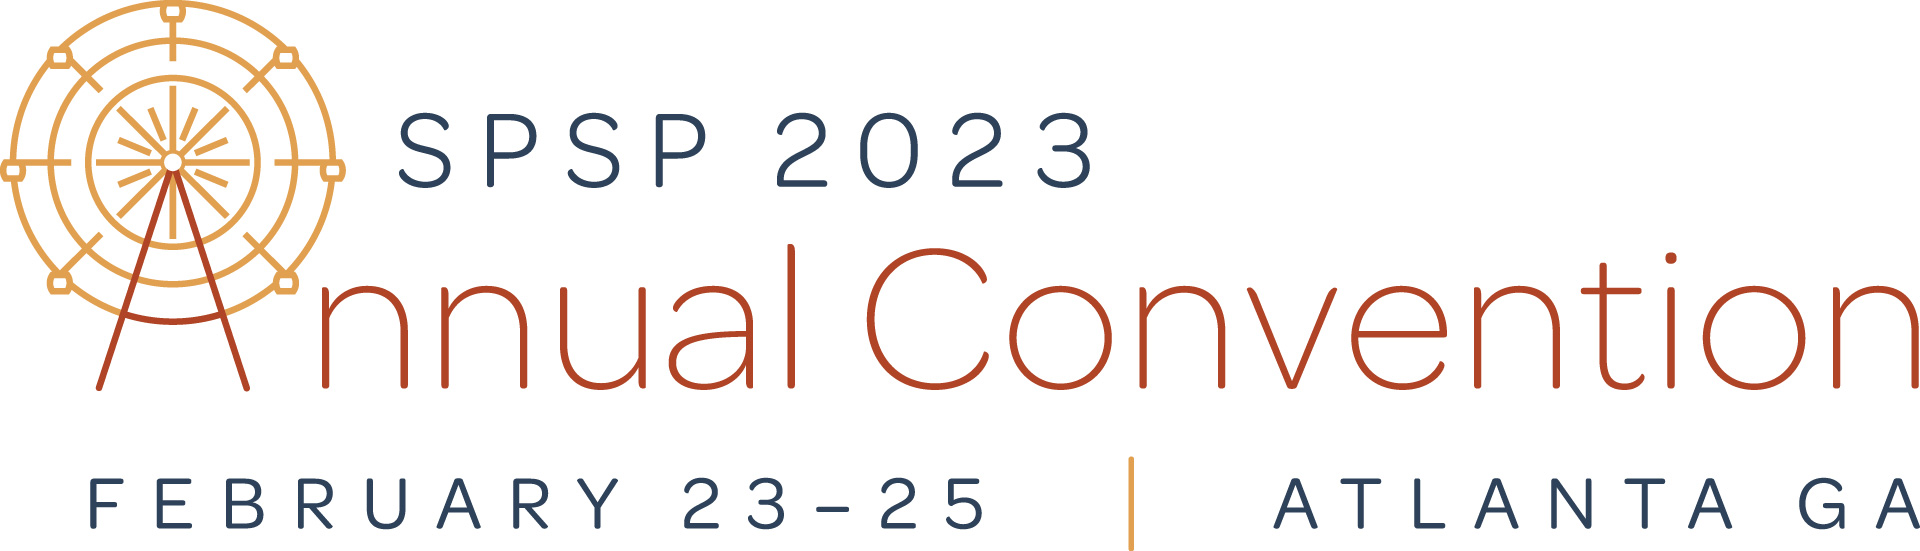 2023 Annual Convention logo